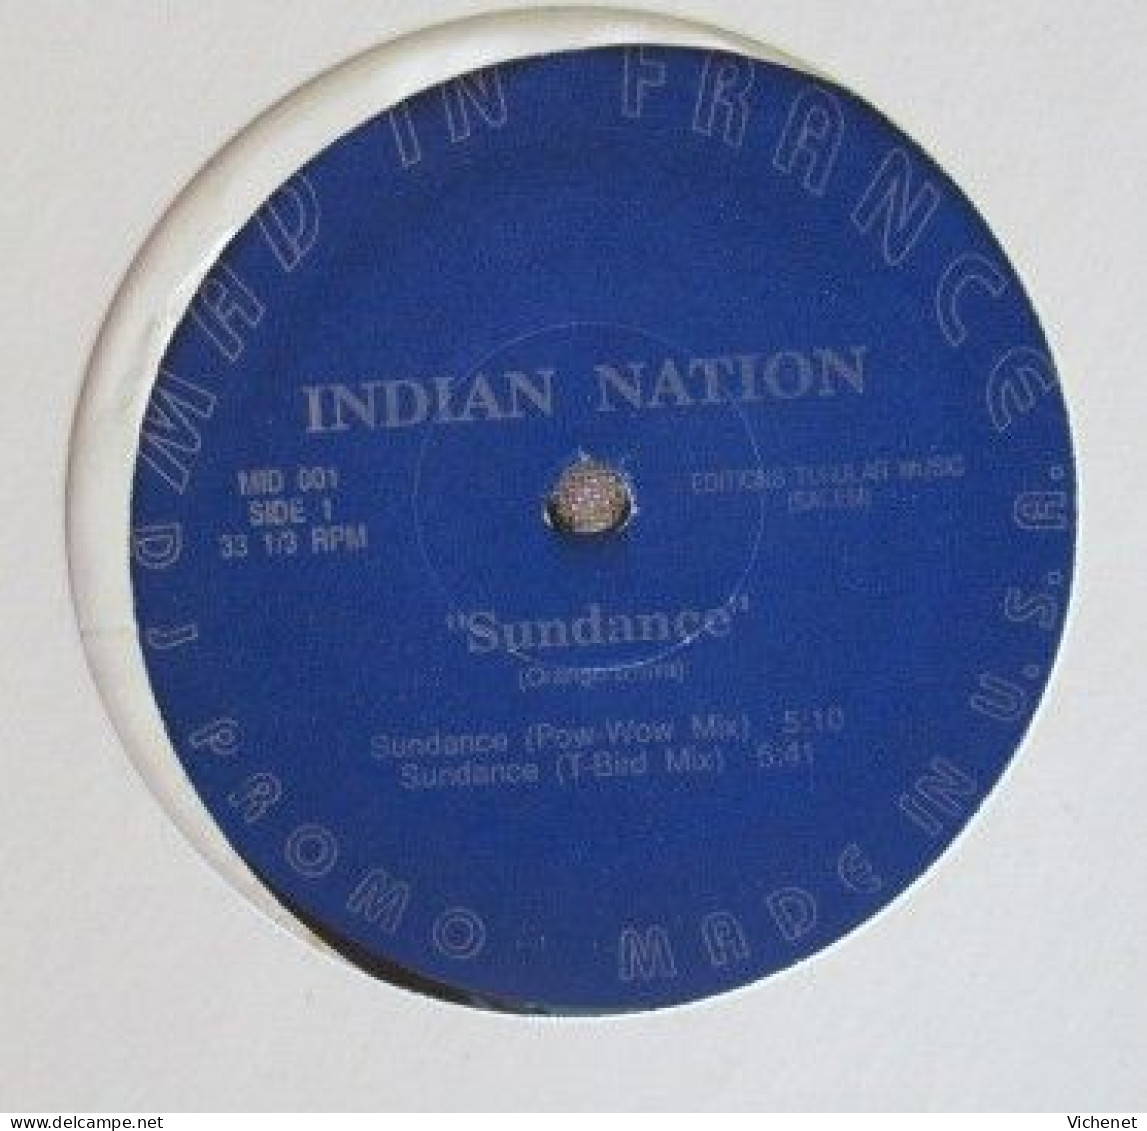 Indian Nation – Sundance - Maxi - 45 G - Maxi-Single